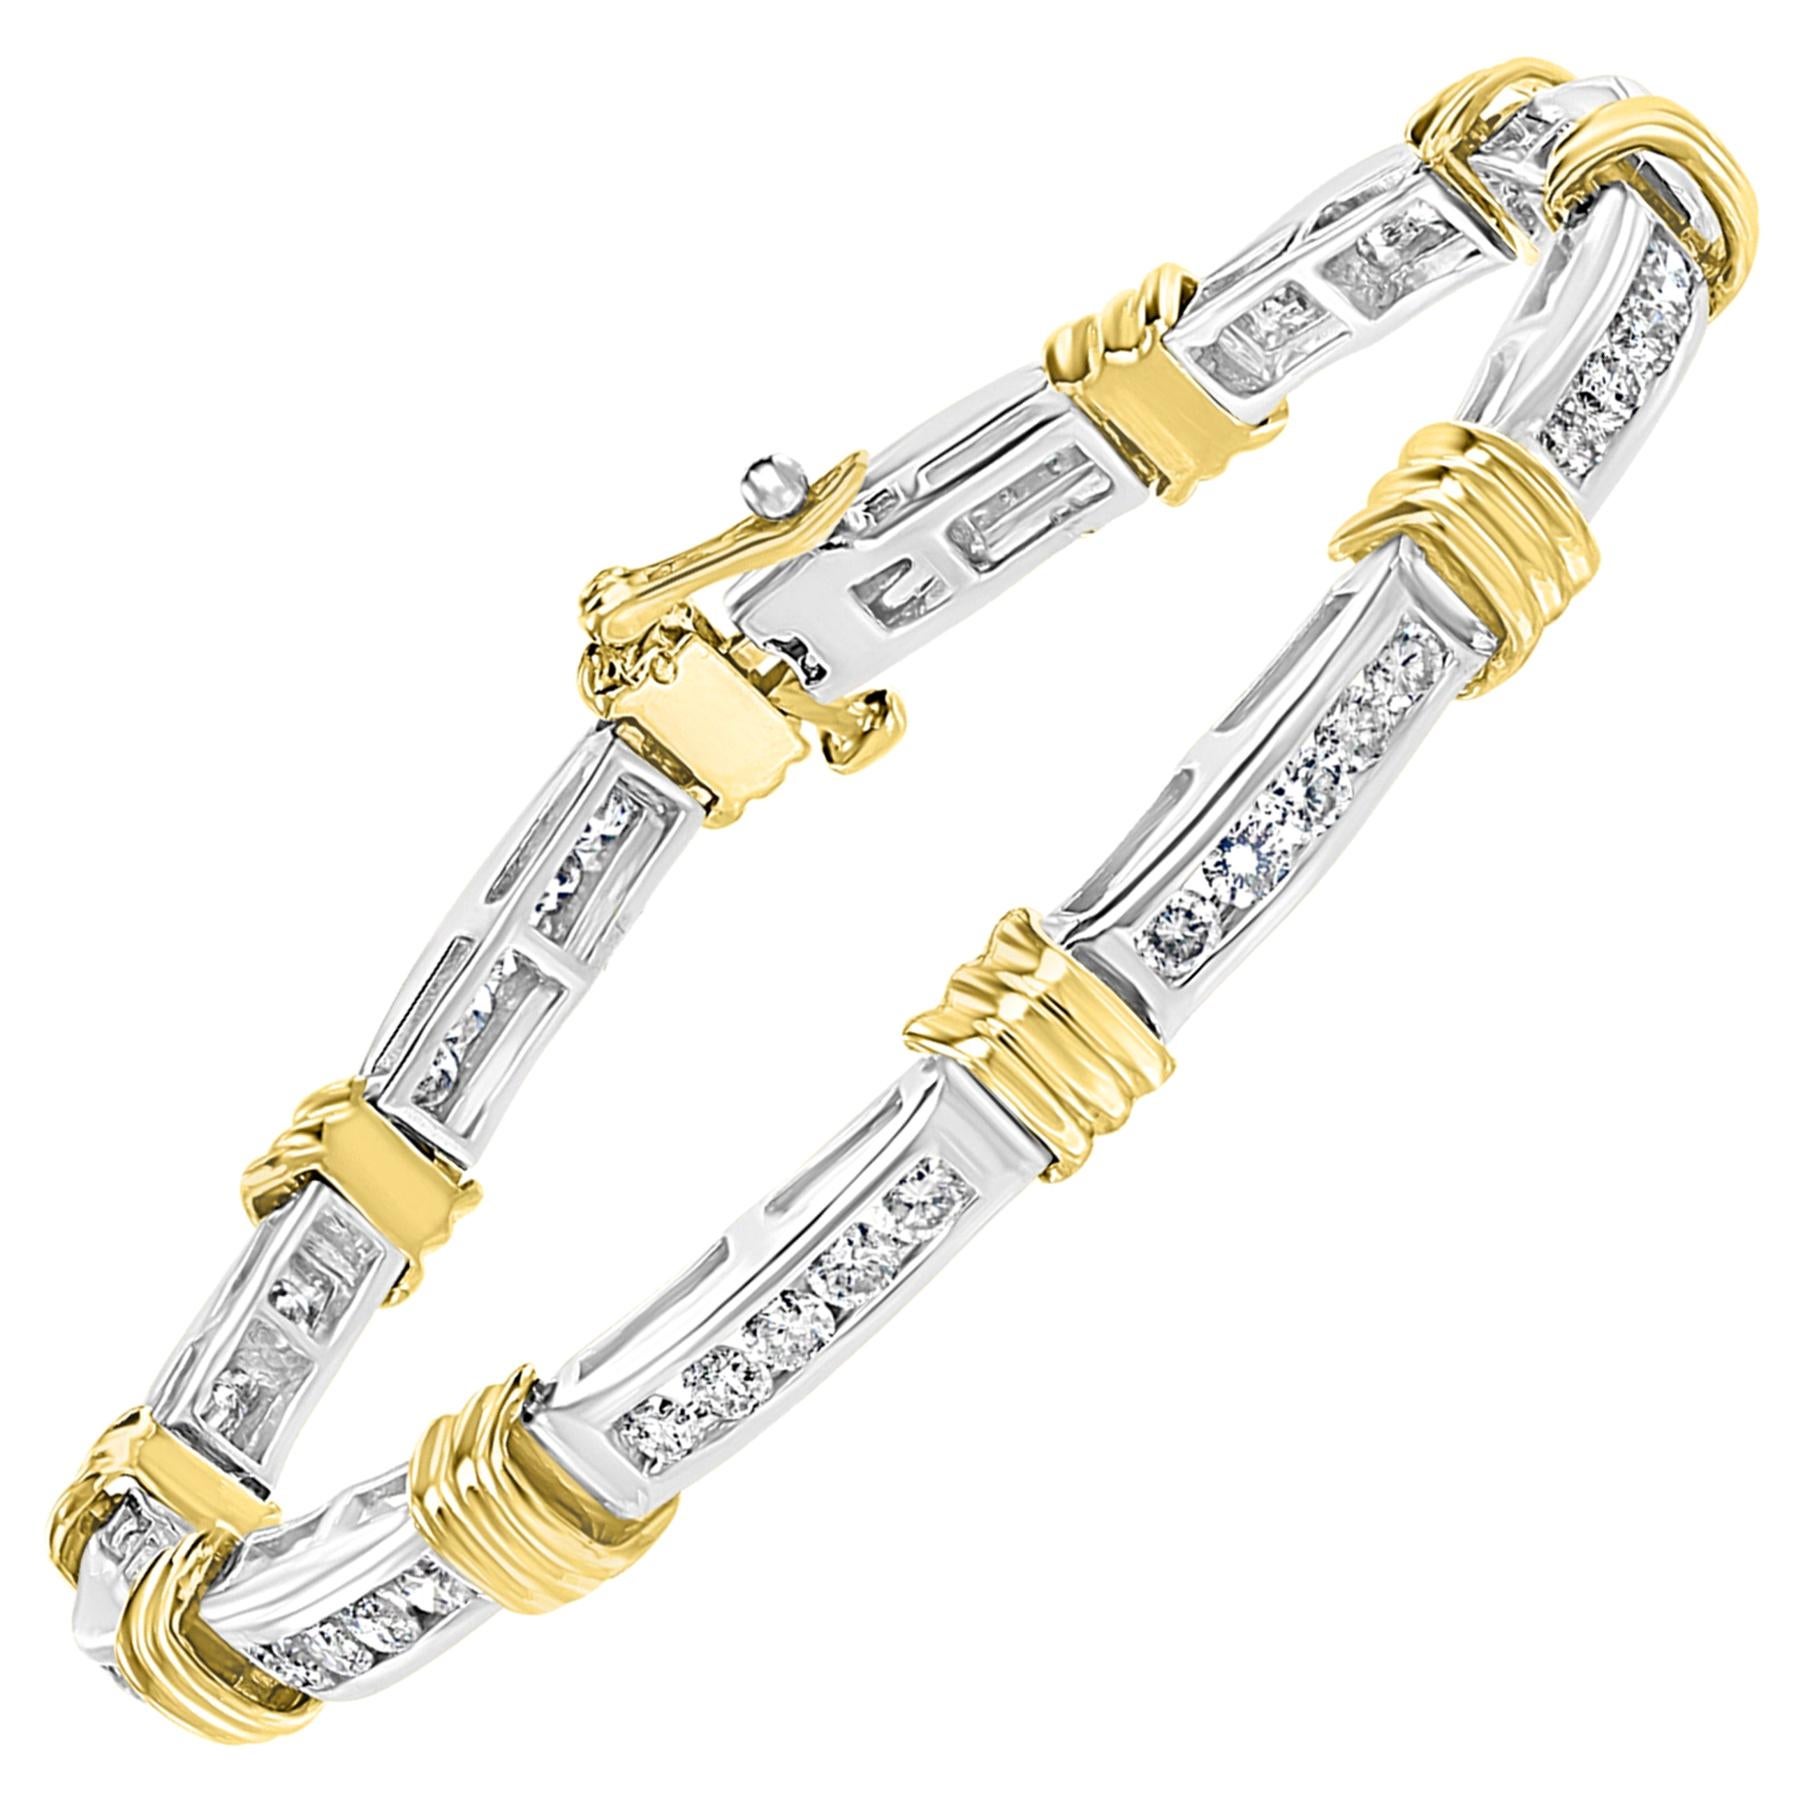 Two-Tone 2.8 Carat Diamond Bracelet in 14 Karat Yellow and White Gold, Estate